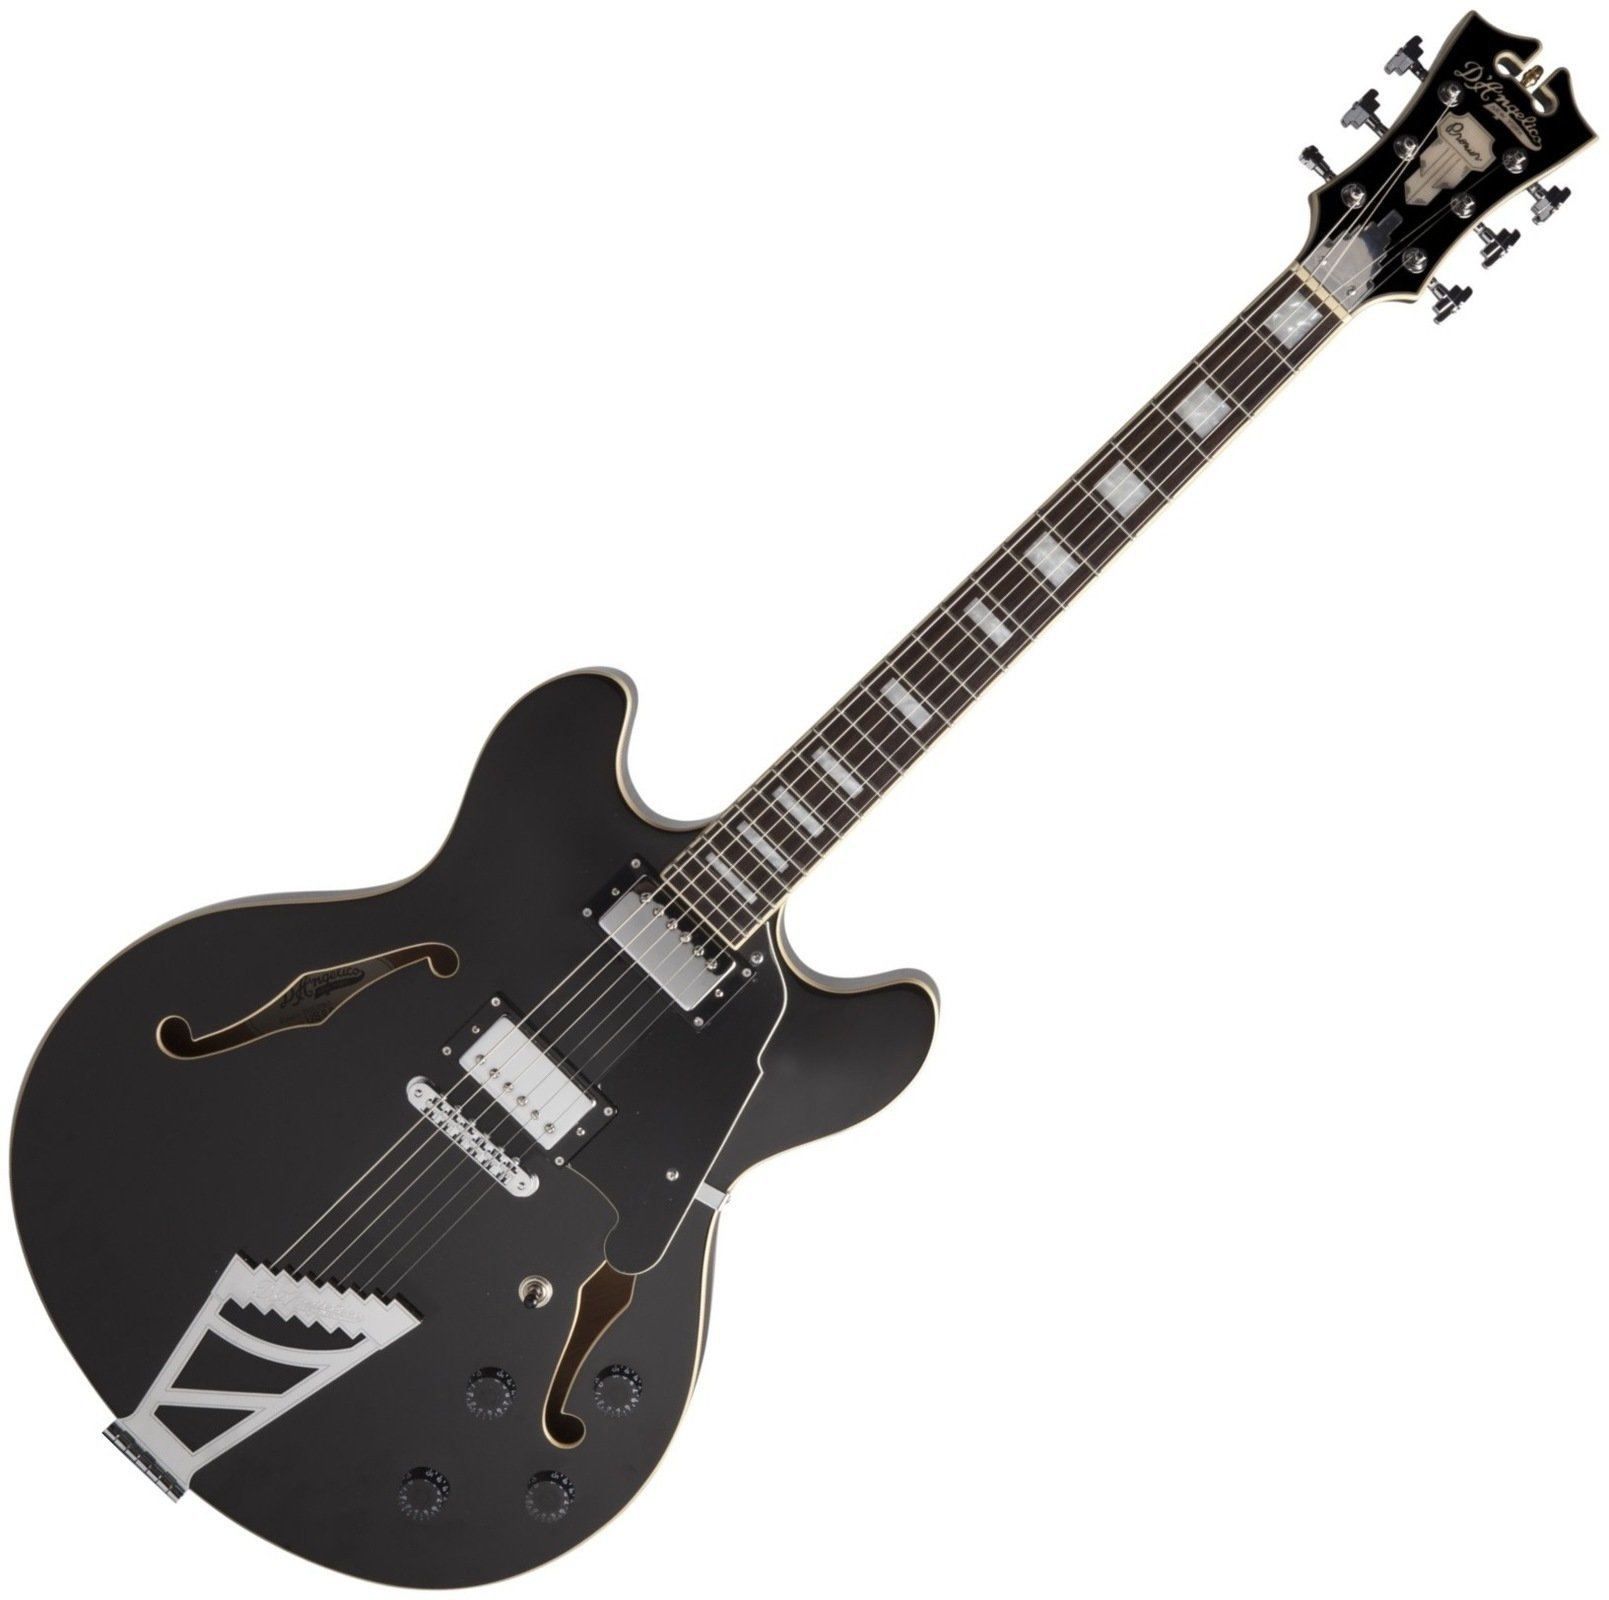 Semiakustická kytara D'Angelico Premier DC Stop-bar Černá